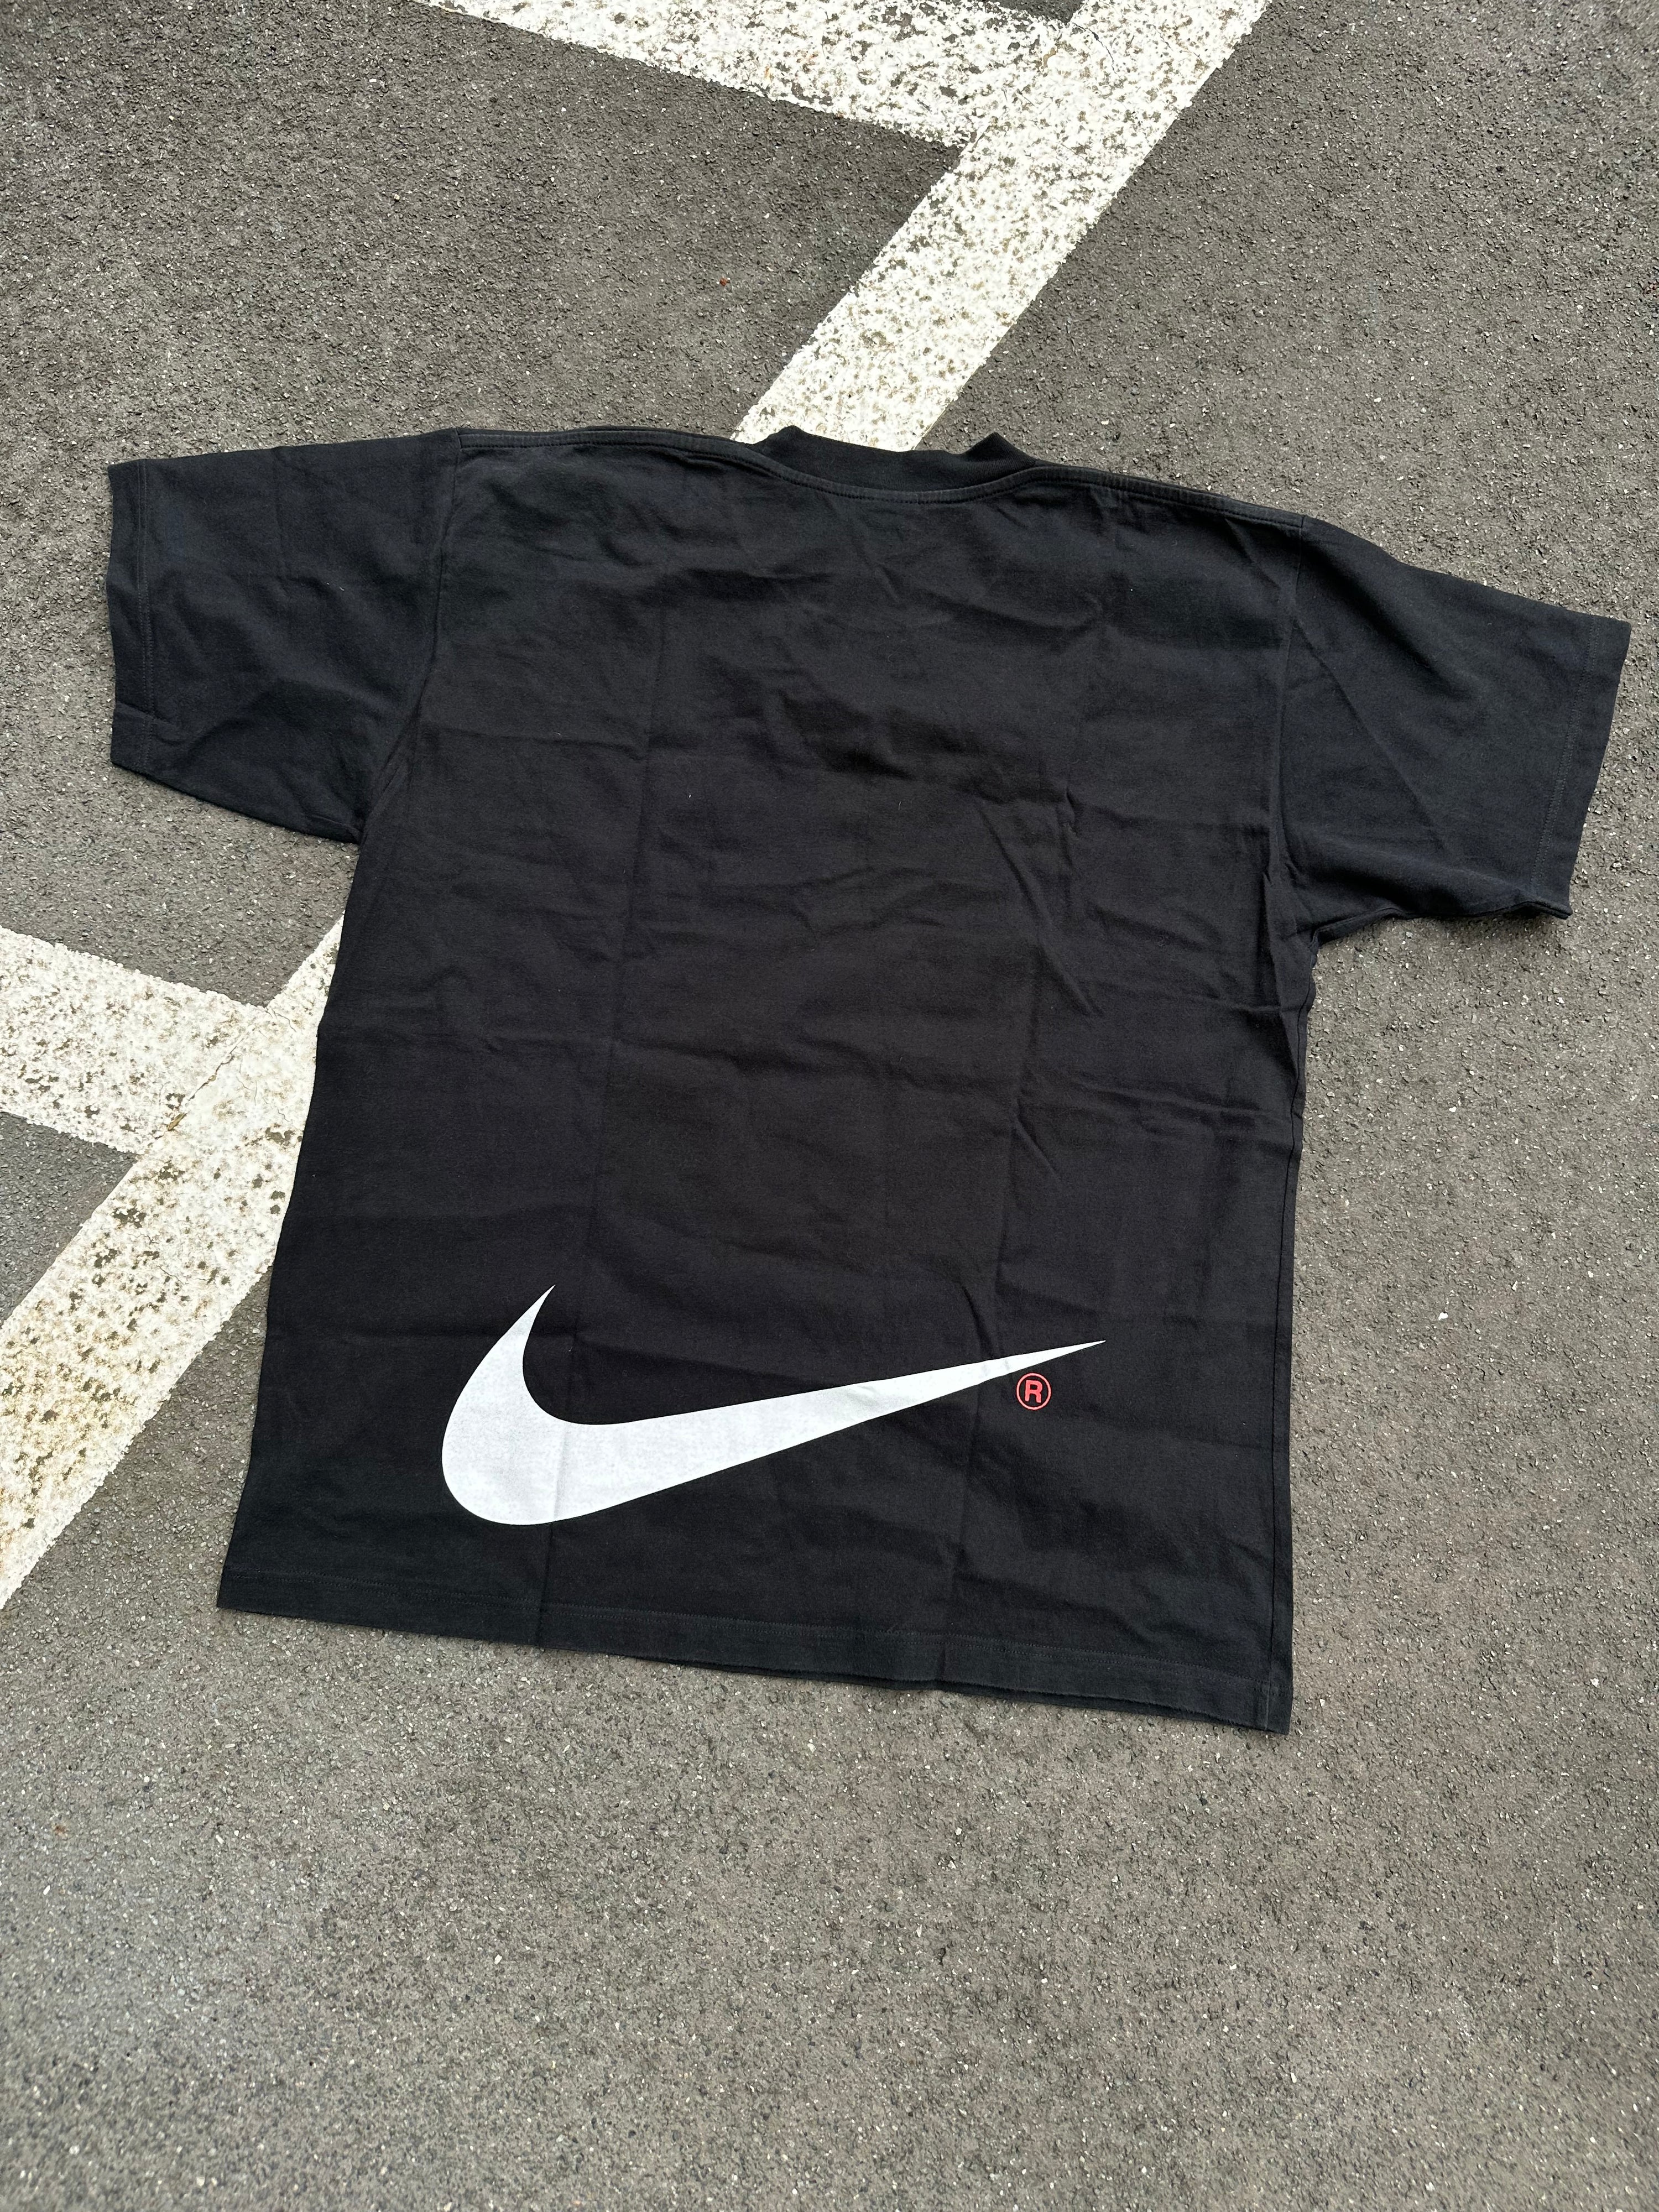 Vintage 90s Nike T-Shirt (XL)